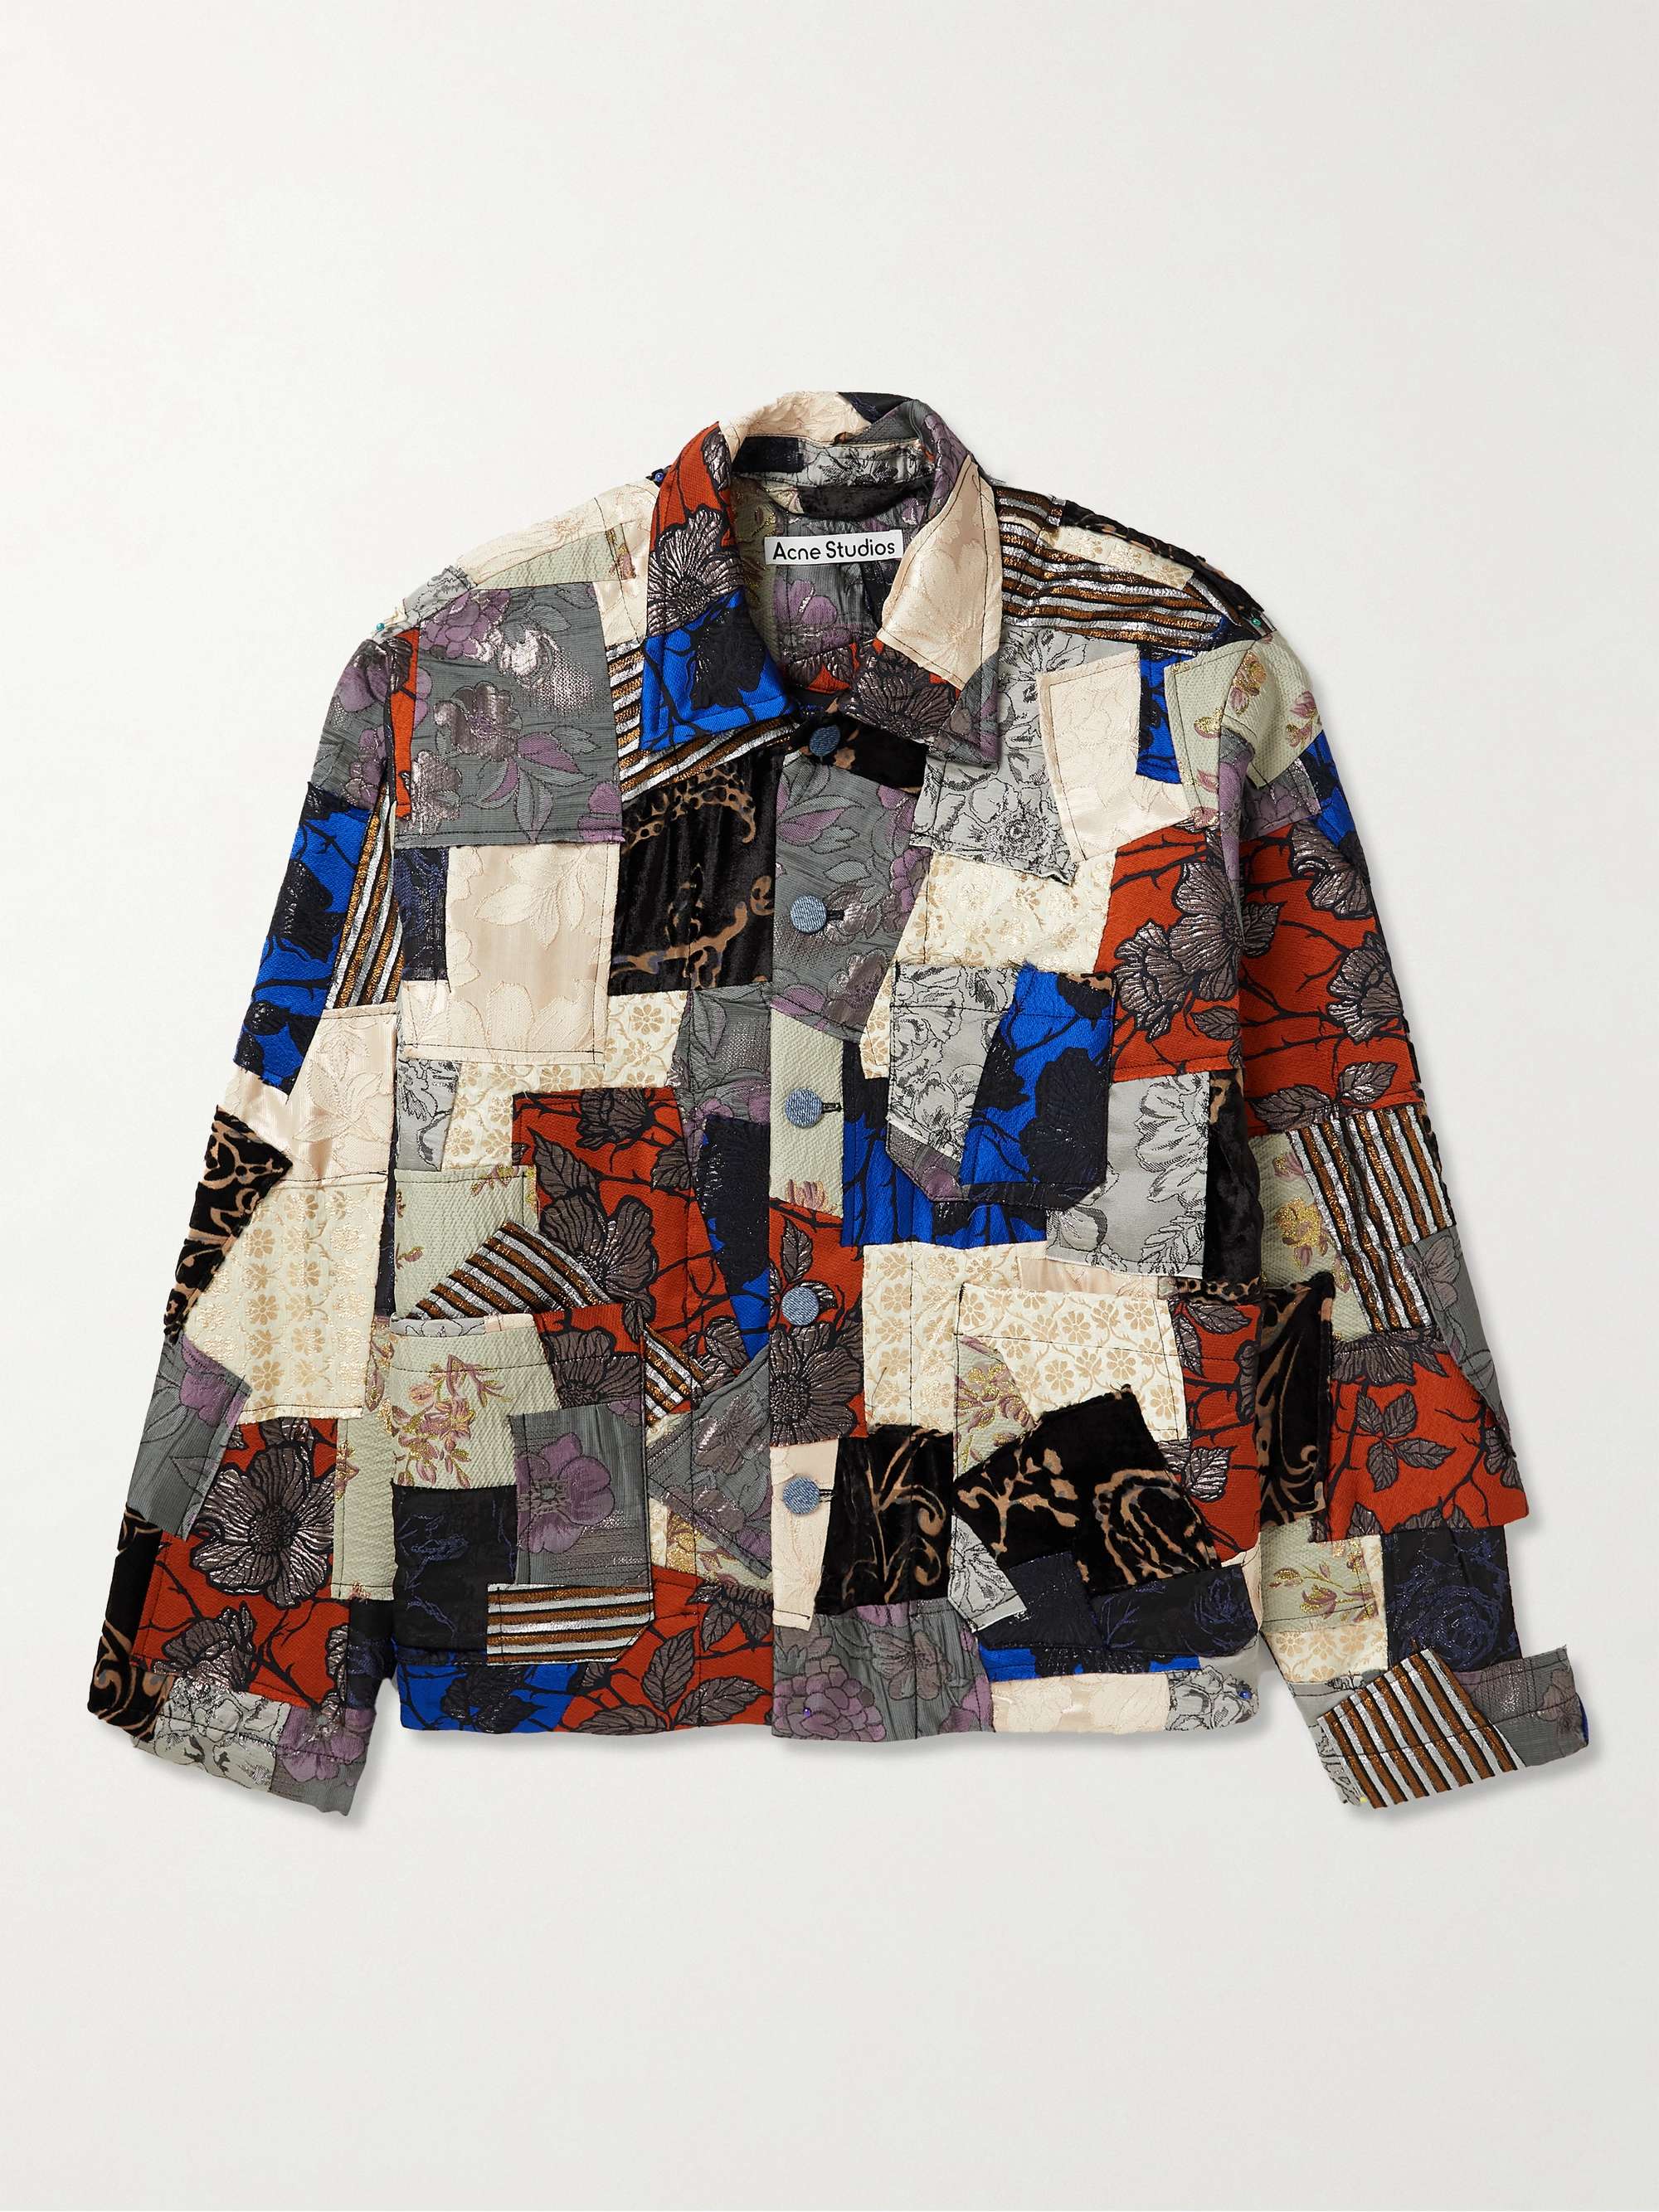 ACNE STUDIOS Patchwork Embroidered Metallic Jacquard Jacket